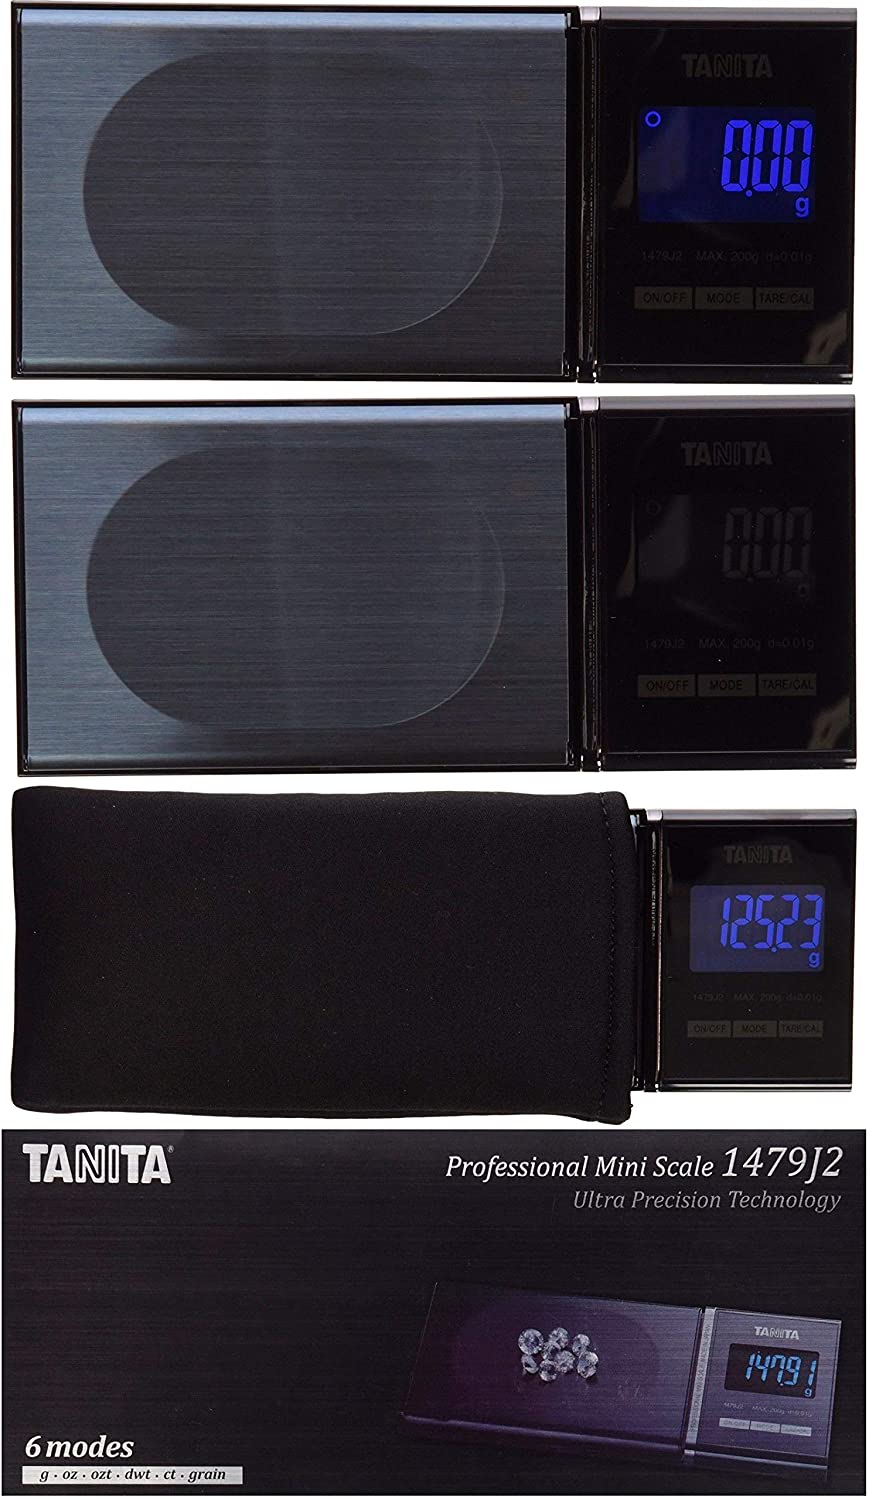 TANITA 1479J2 - Mini Balanza de precisión Profesional - Capacidad 200 gr  con Precisión 0,01gr @ NOVAMART SOLUTION - COSTA RICA